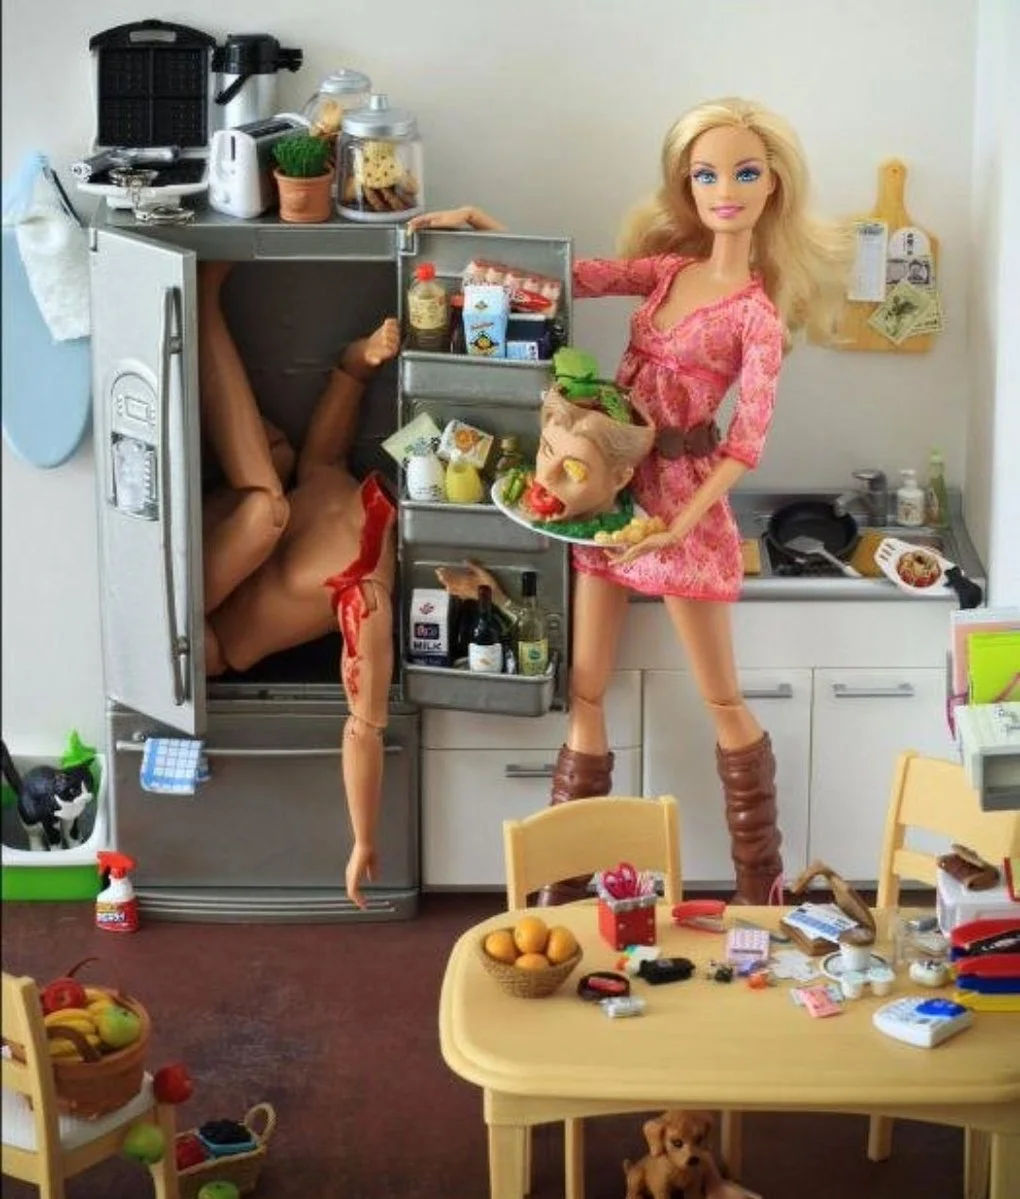 Хулиганка, стриптизерша и фанатка БДСМ: в соцсетях показали тайную жизнь куклы Барби - фото 441435